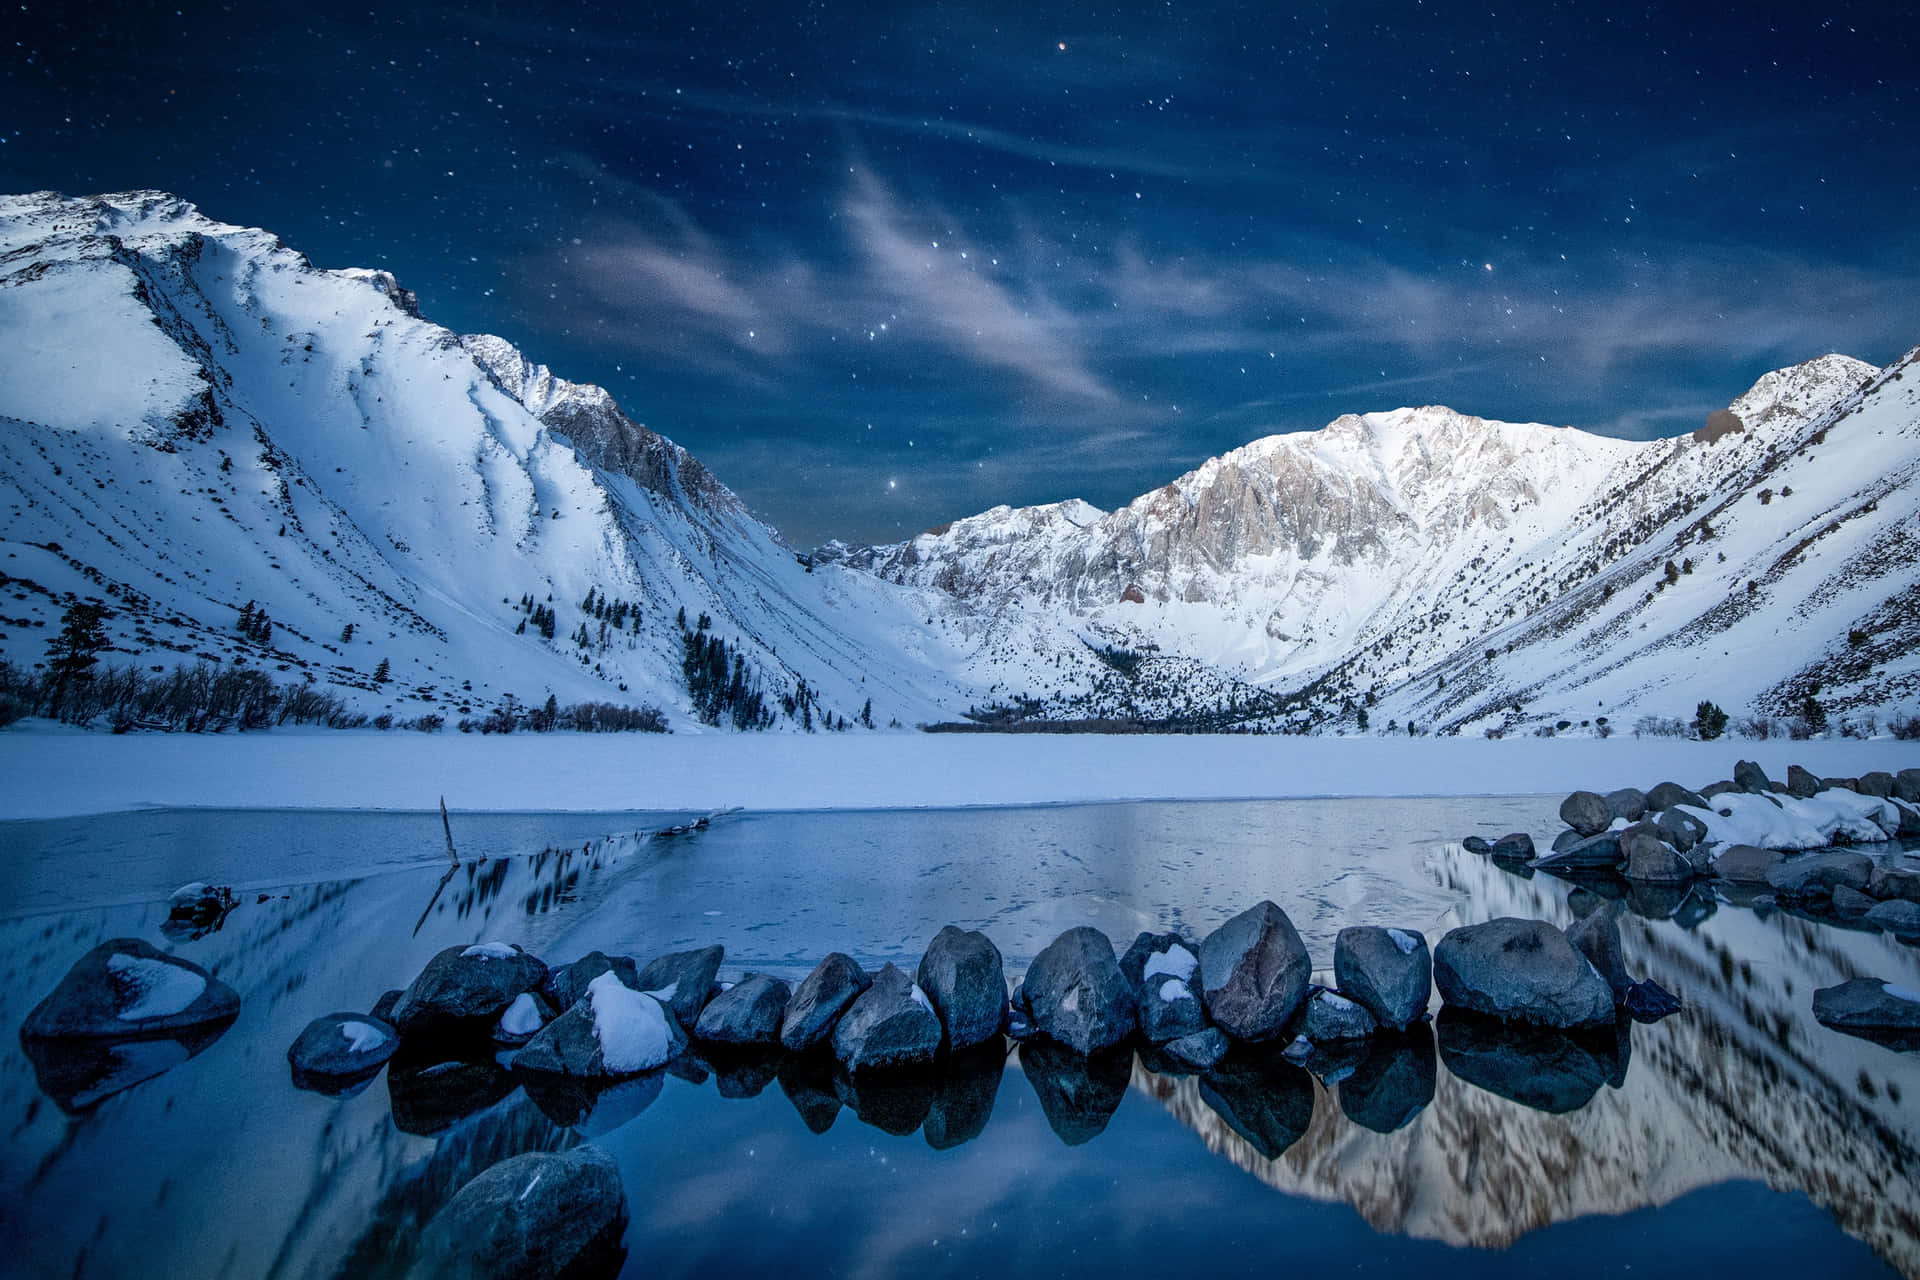 A Serene Scene of Snowy Mountain